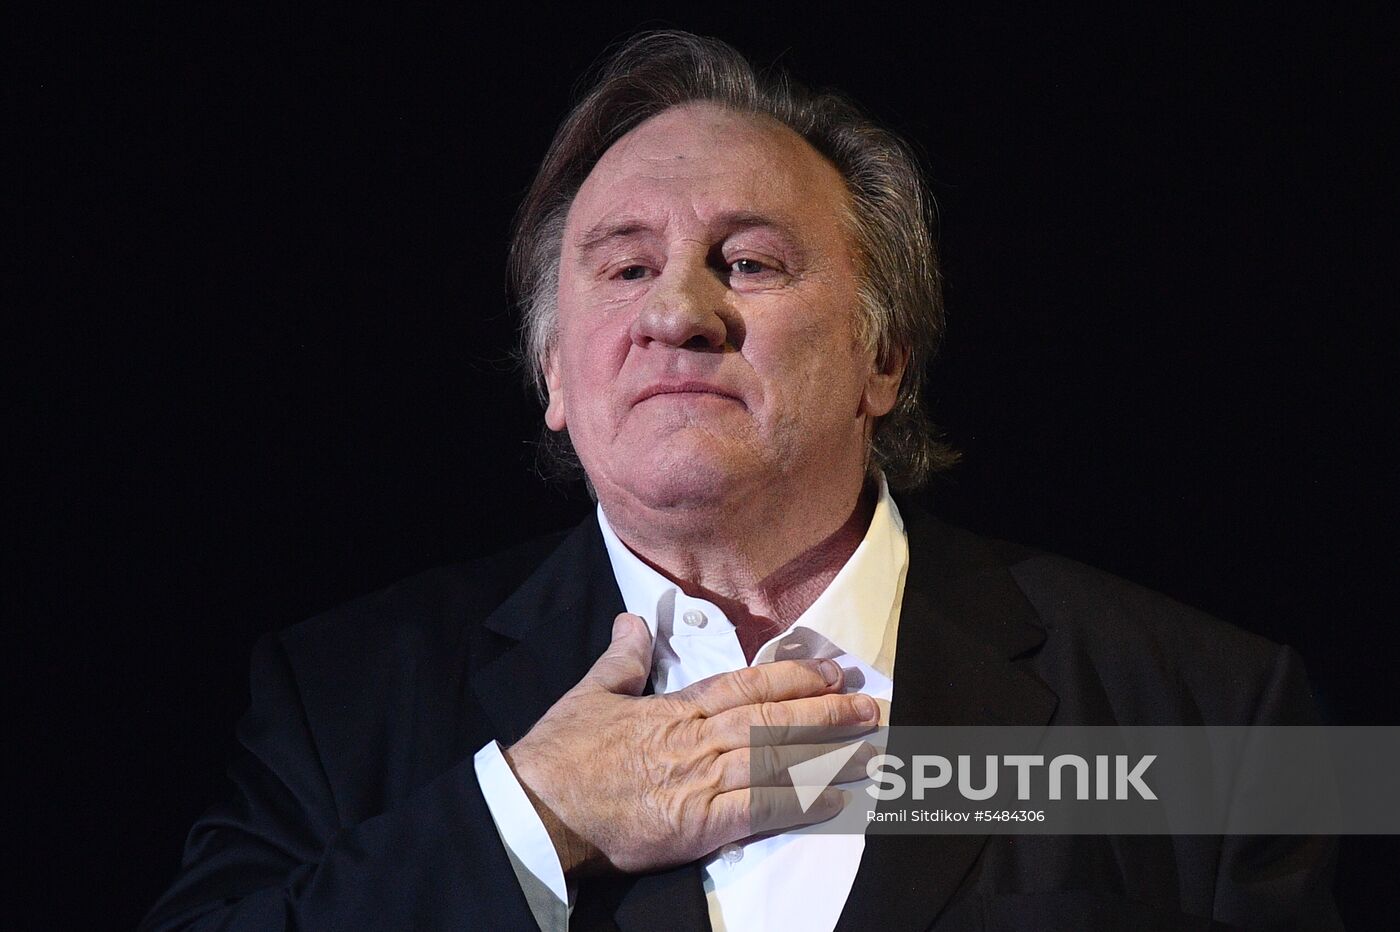 Concert to mark Vladimir Vysotsky's 80th birthday